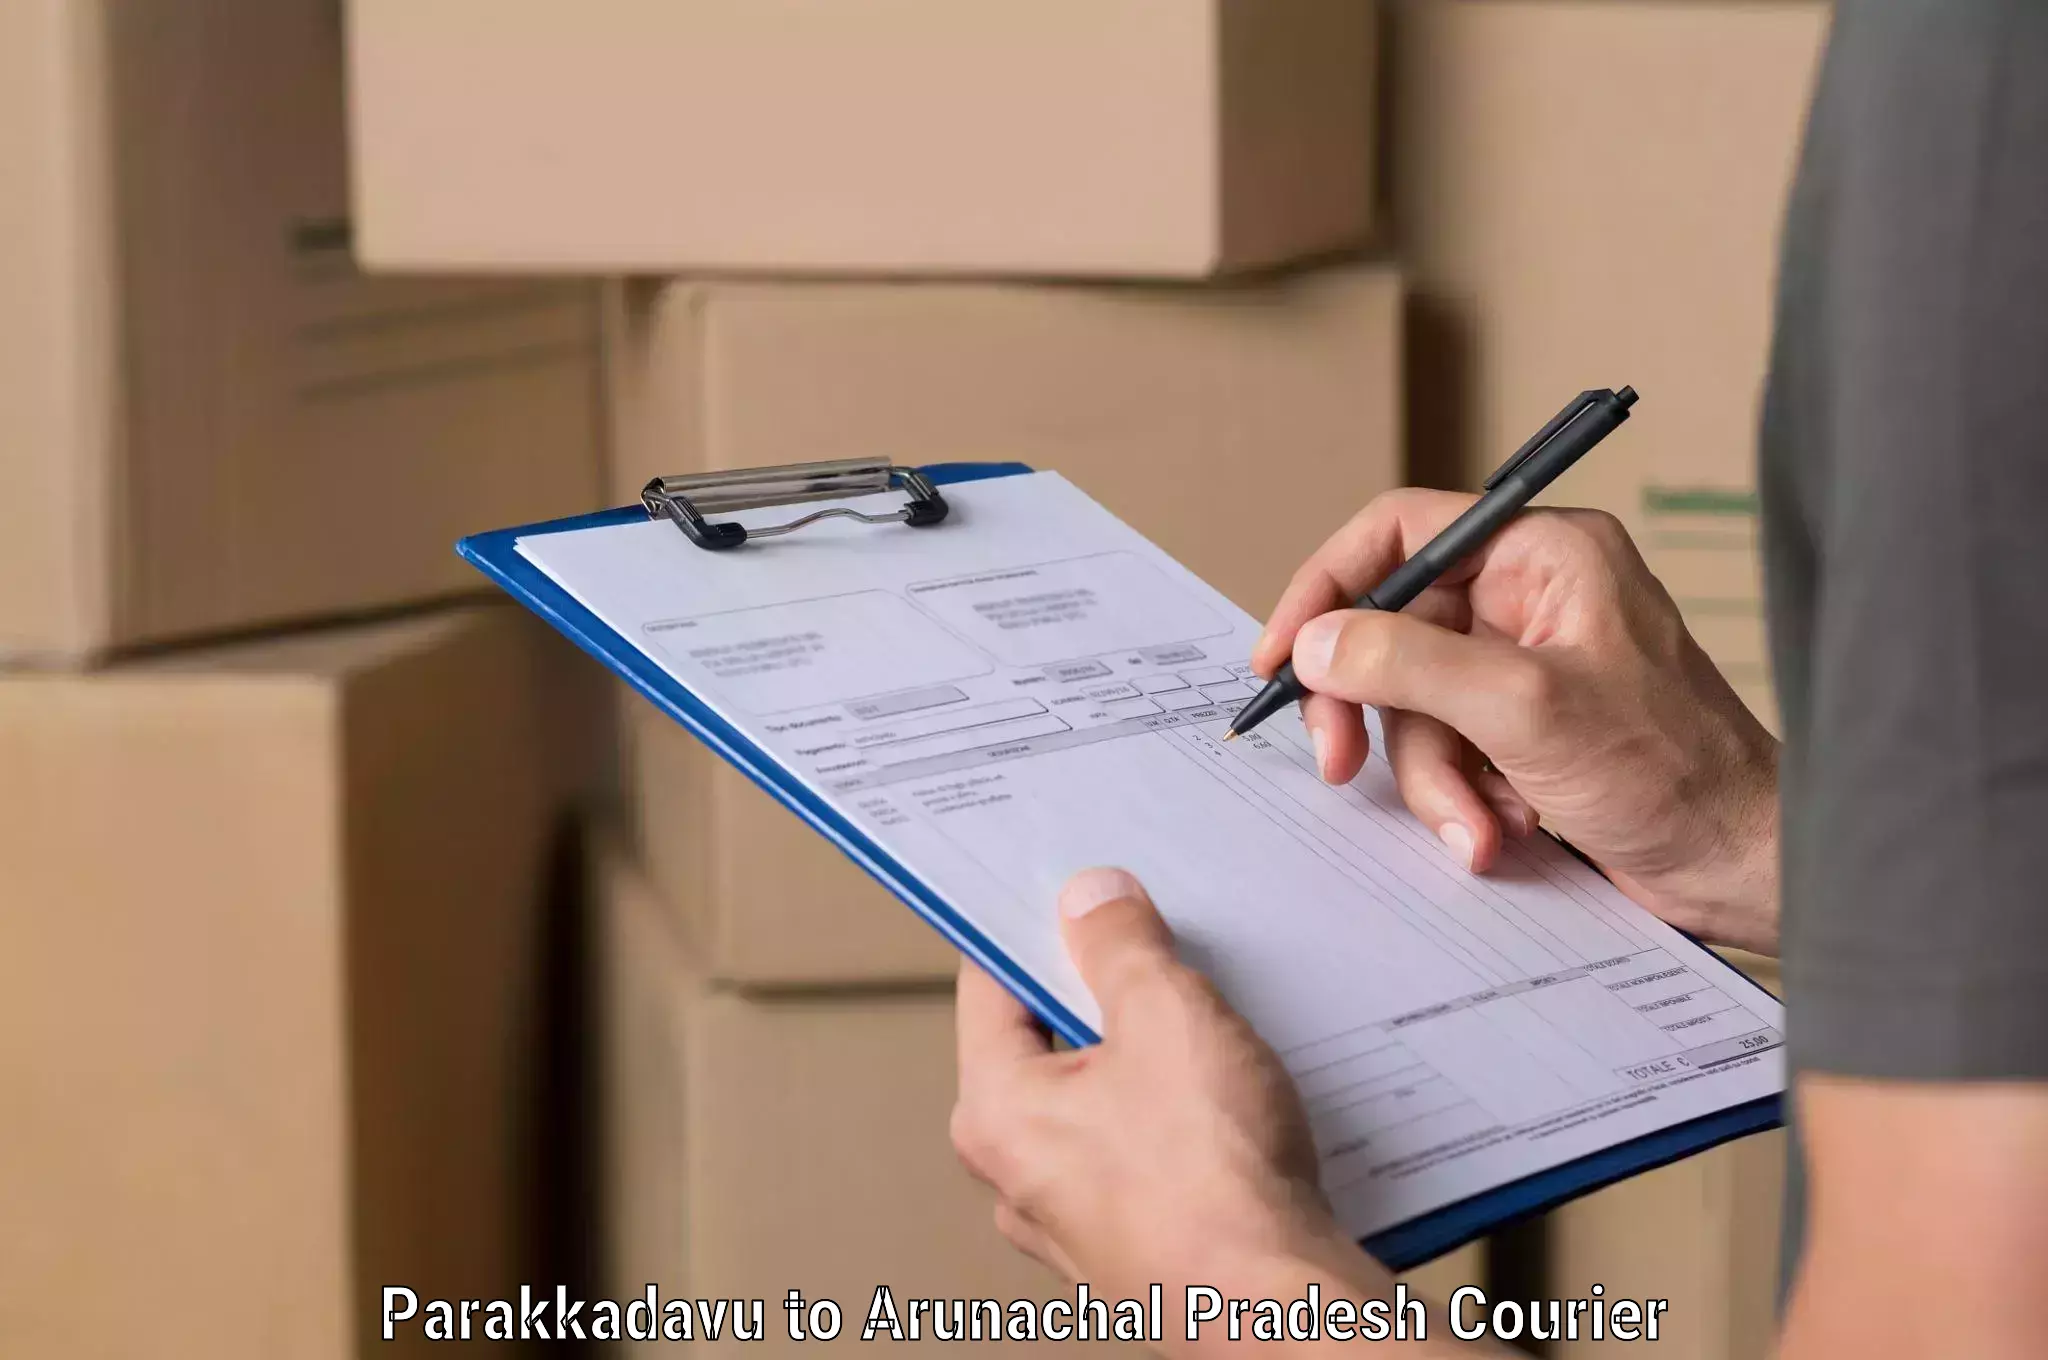 Parcel handling and care Parakkadavu to Pasighat